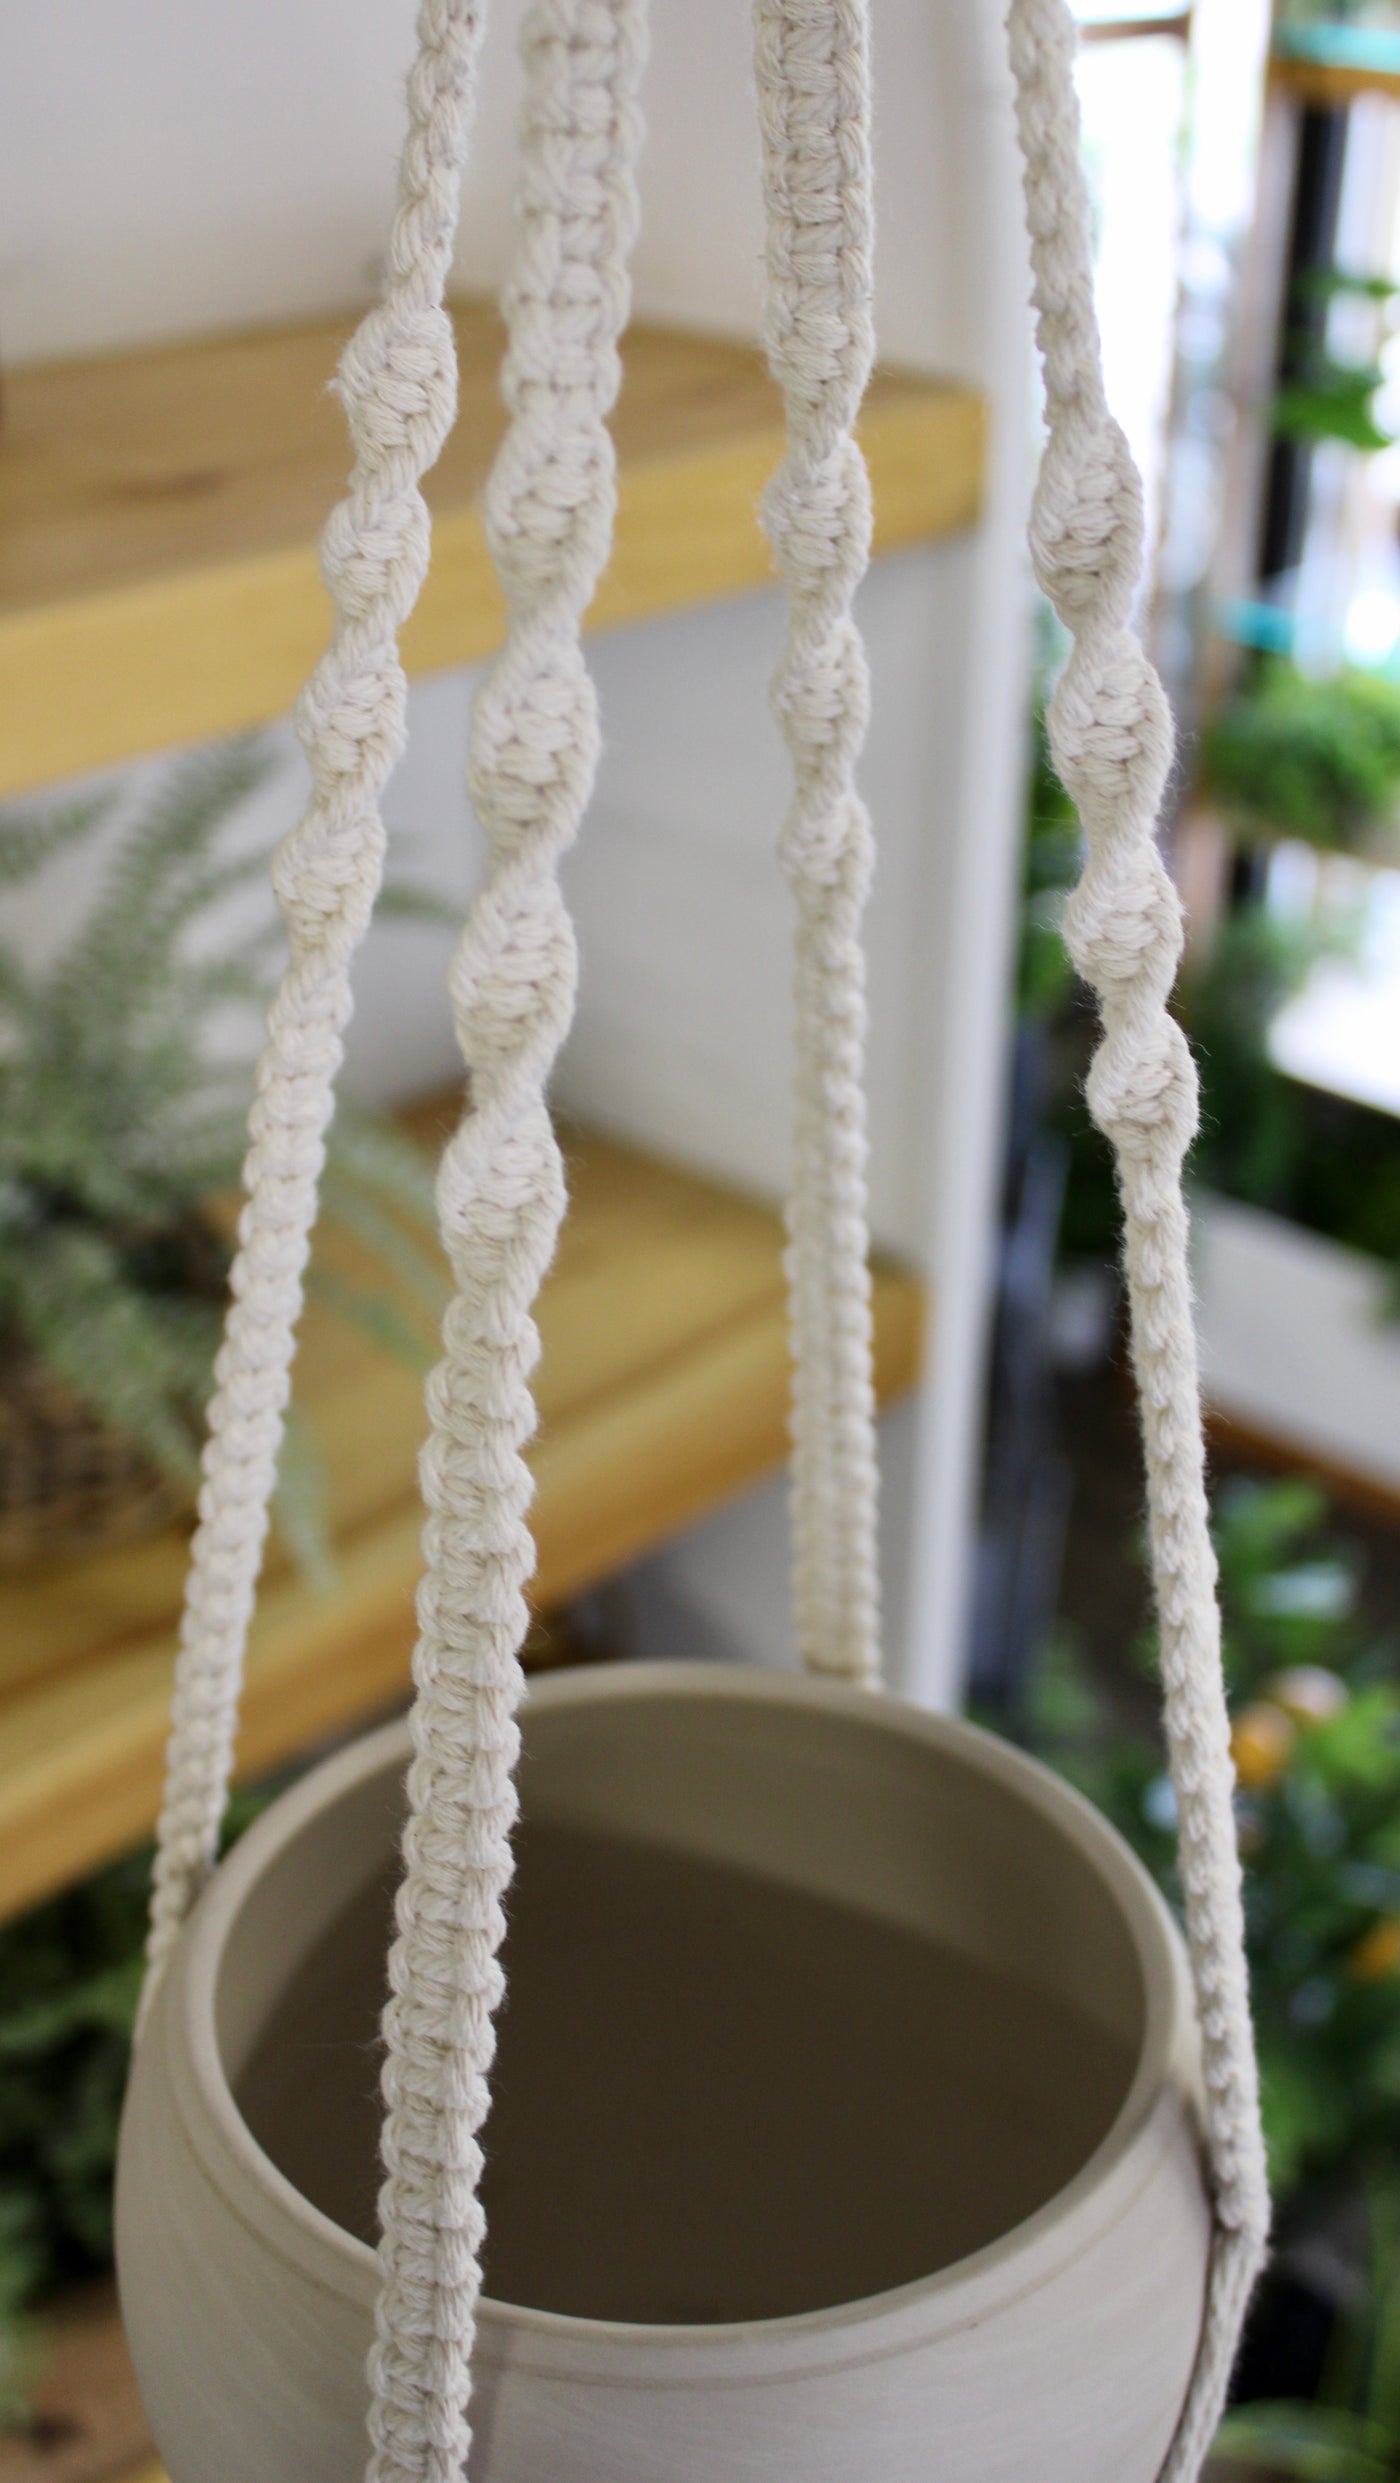 “So Knotted” Macramé Plant Hangers